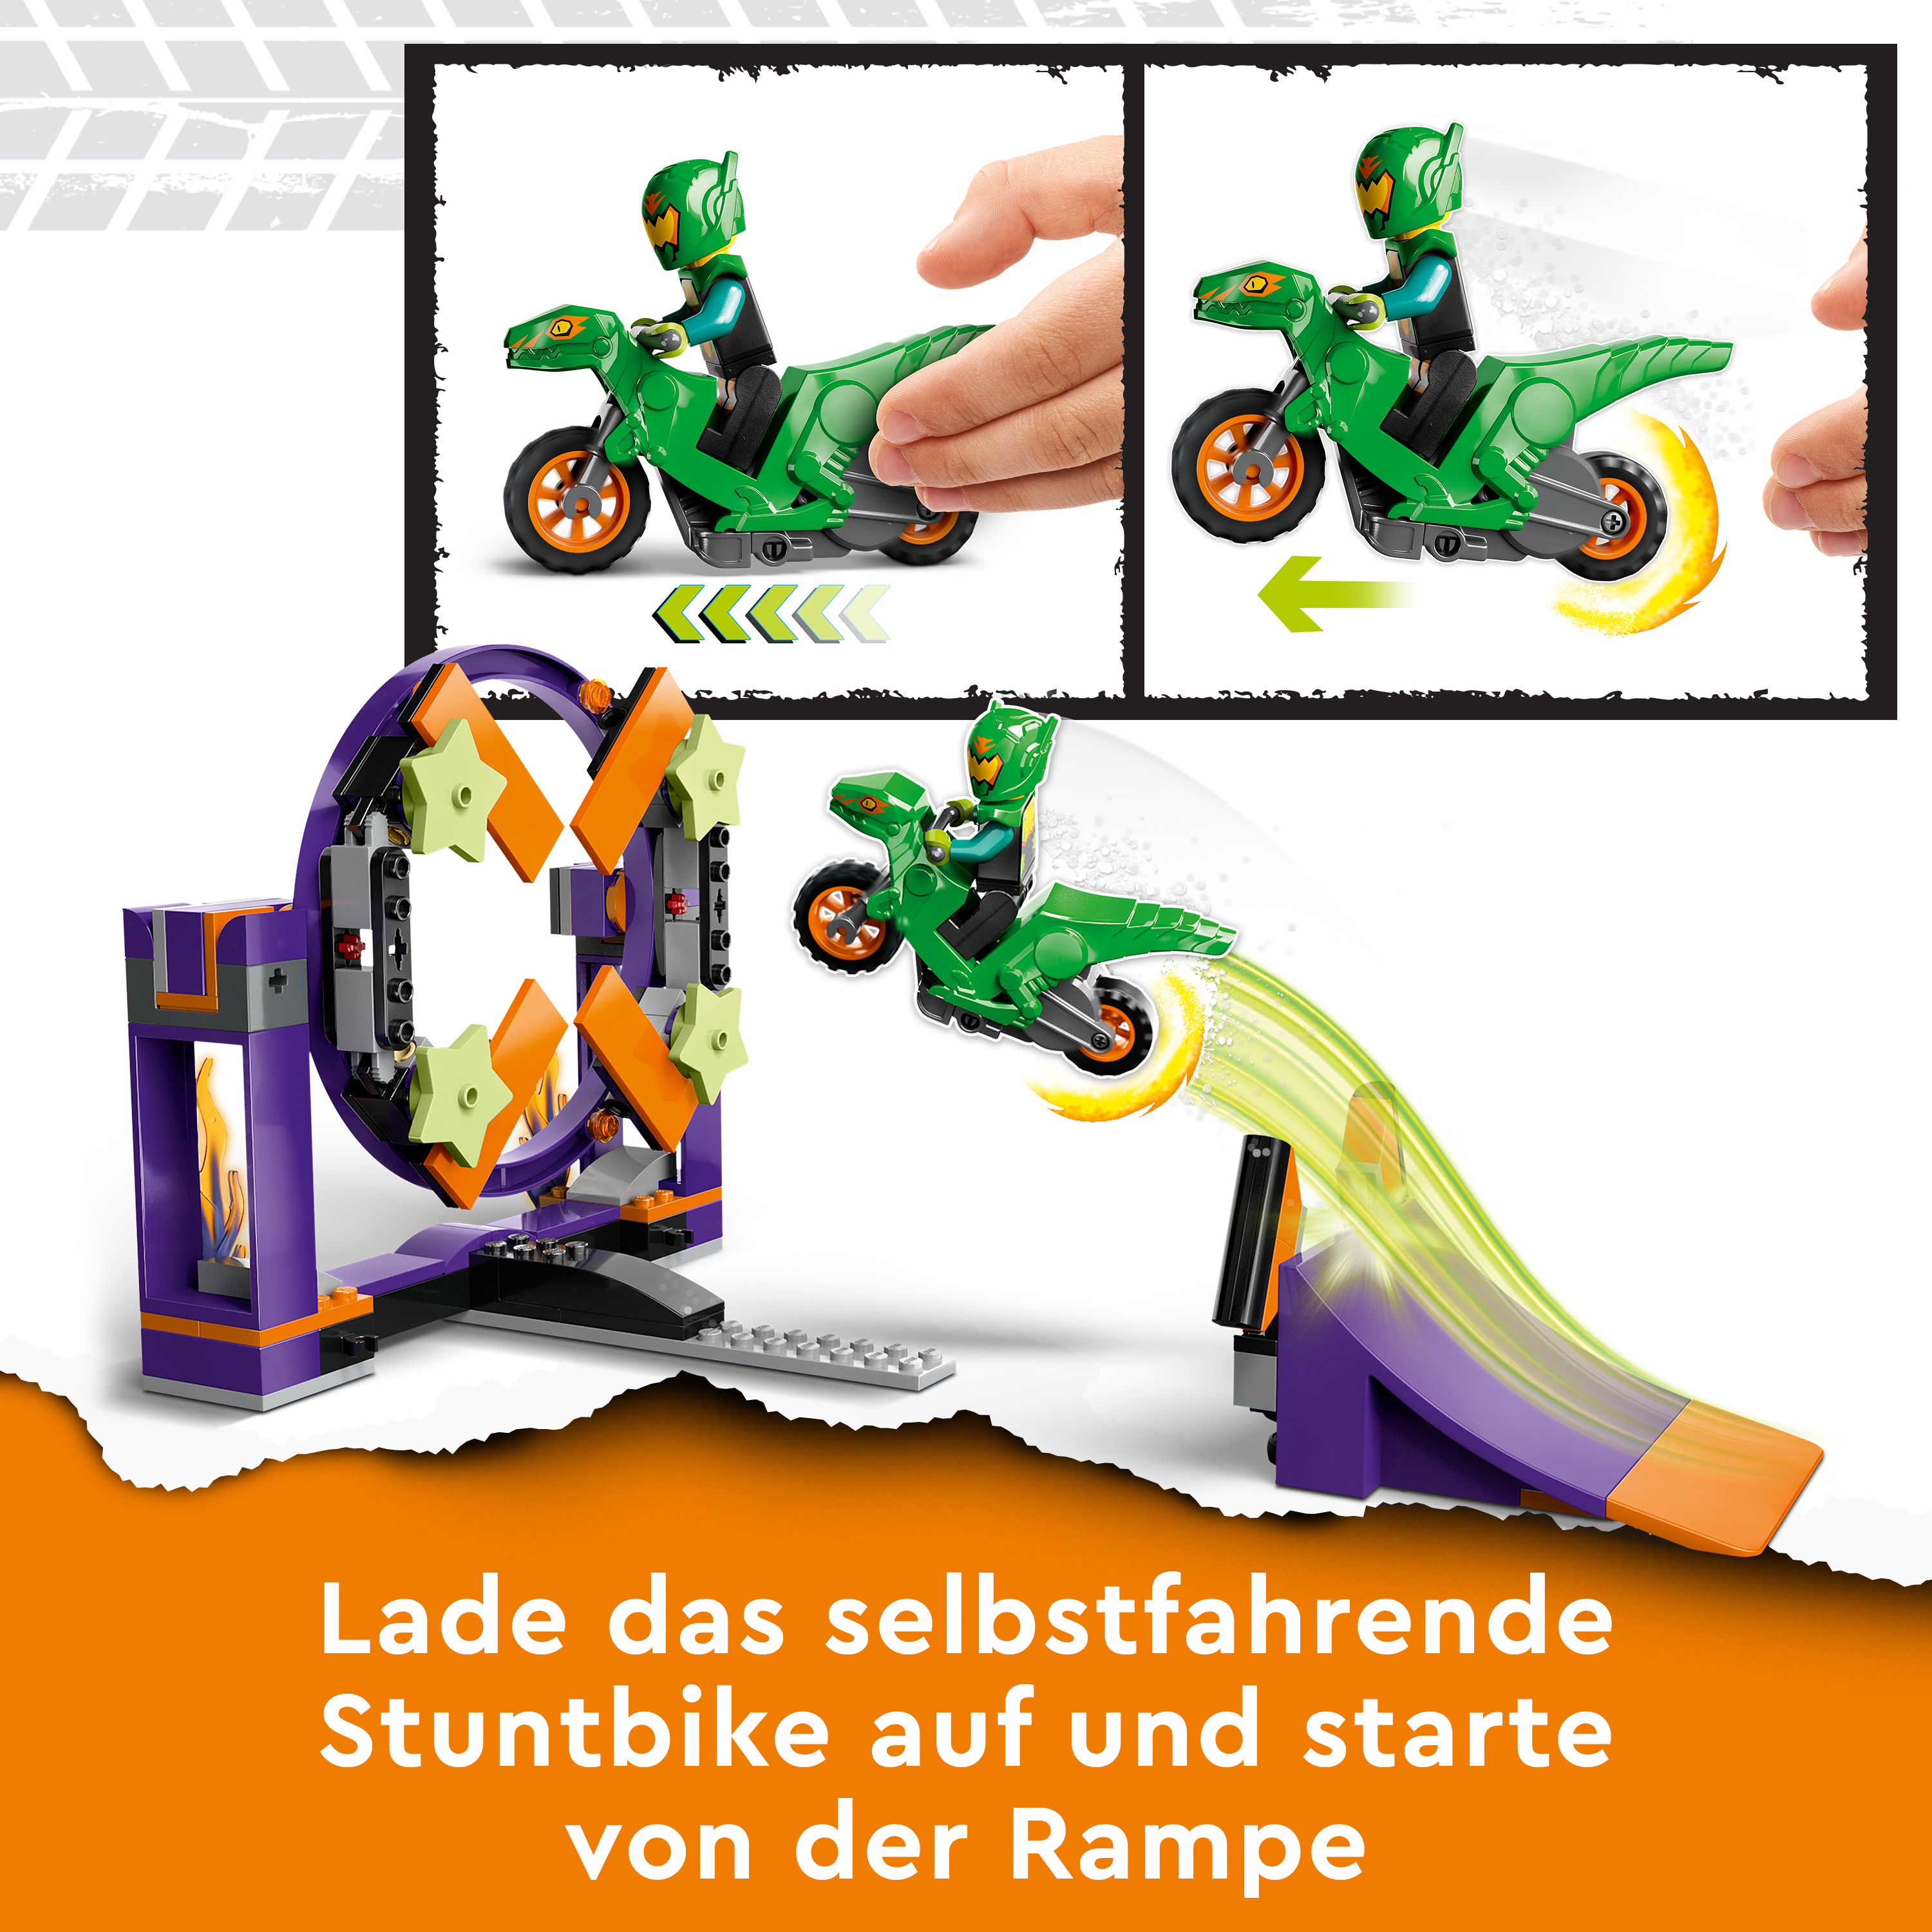 LEGO City Stuntz 60359 Sturzflug-Challenge Mehrfarbig Bausatz